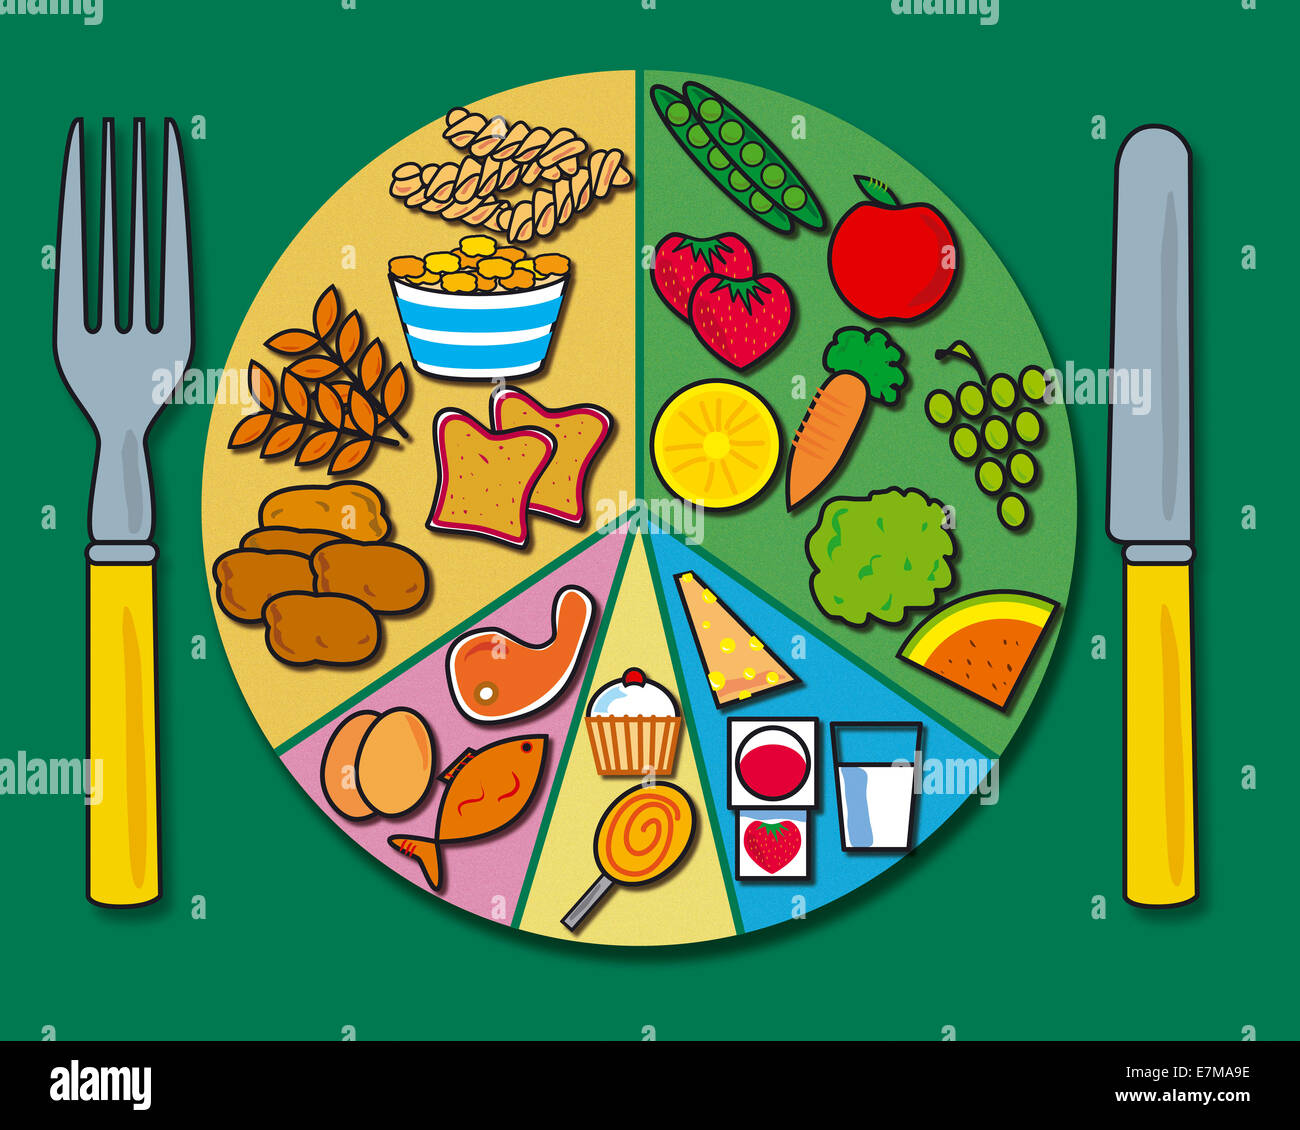 Balanced Healthy Diet Cartoon - Help Health